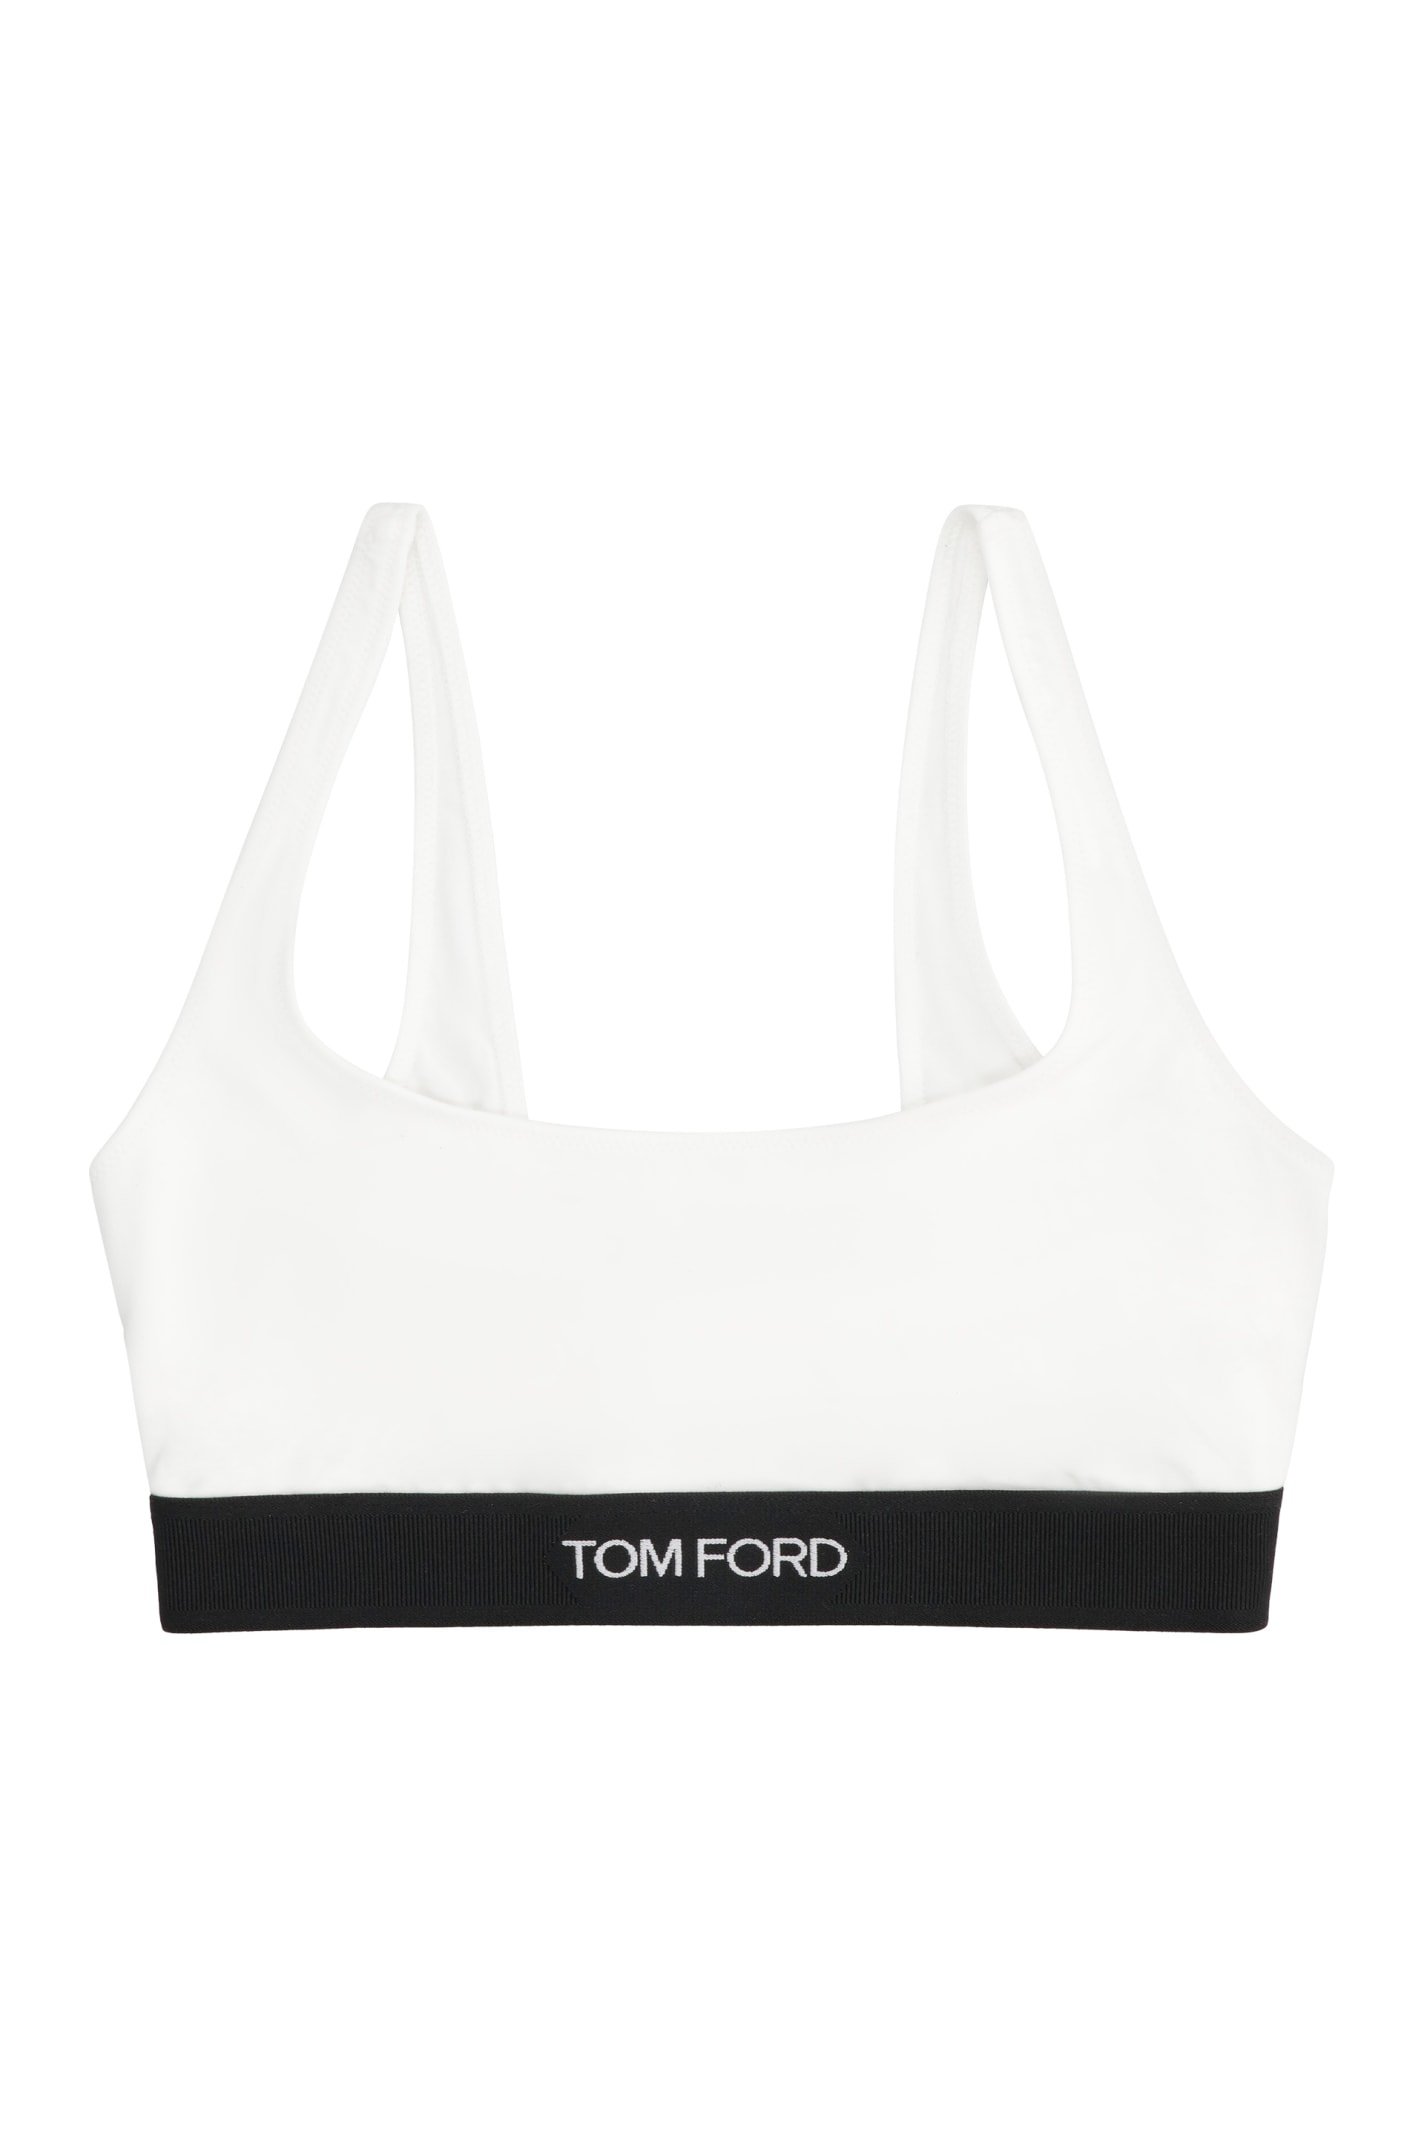 Tom Ford Sports Bra In White